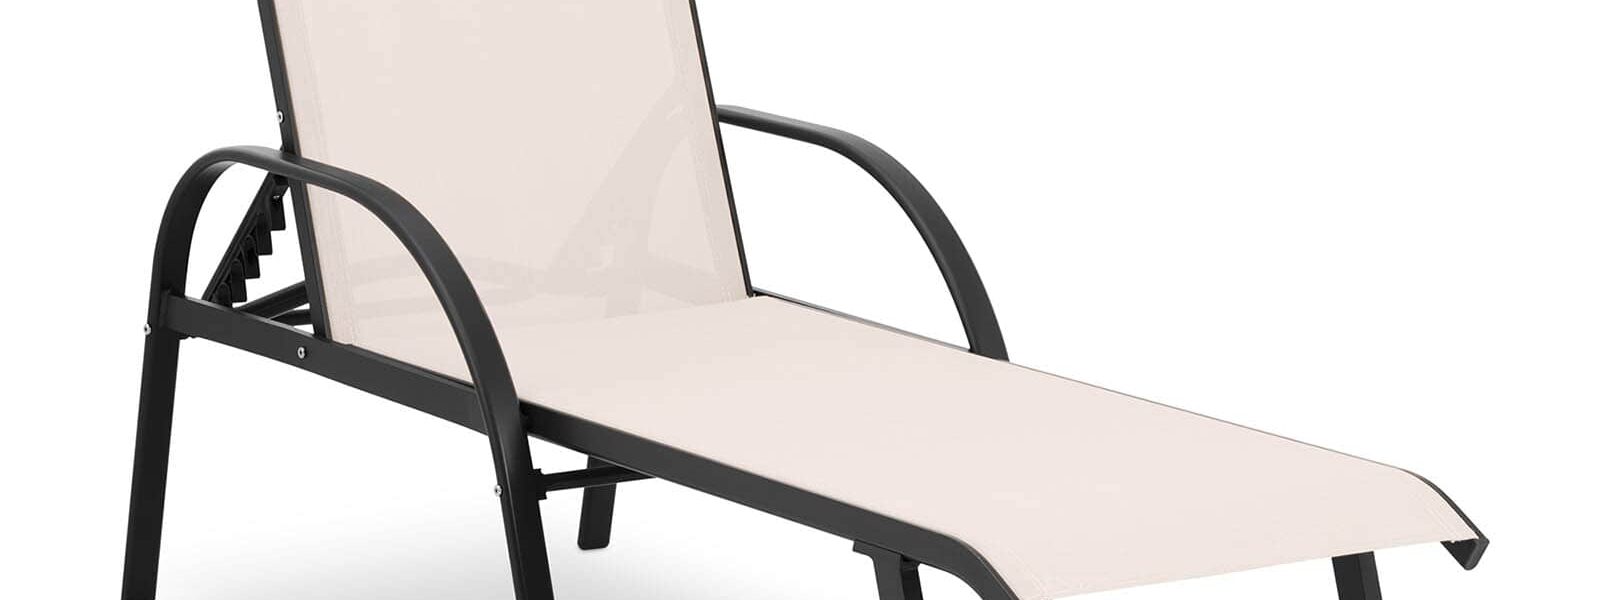 Tweedehands ligstoel – beige – aluminium frame – verstelbare rugleuning